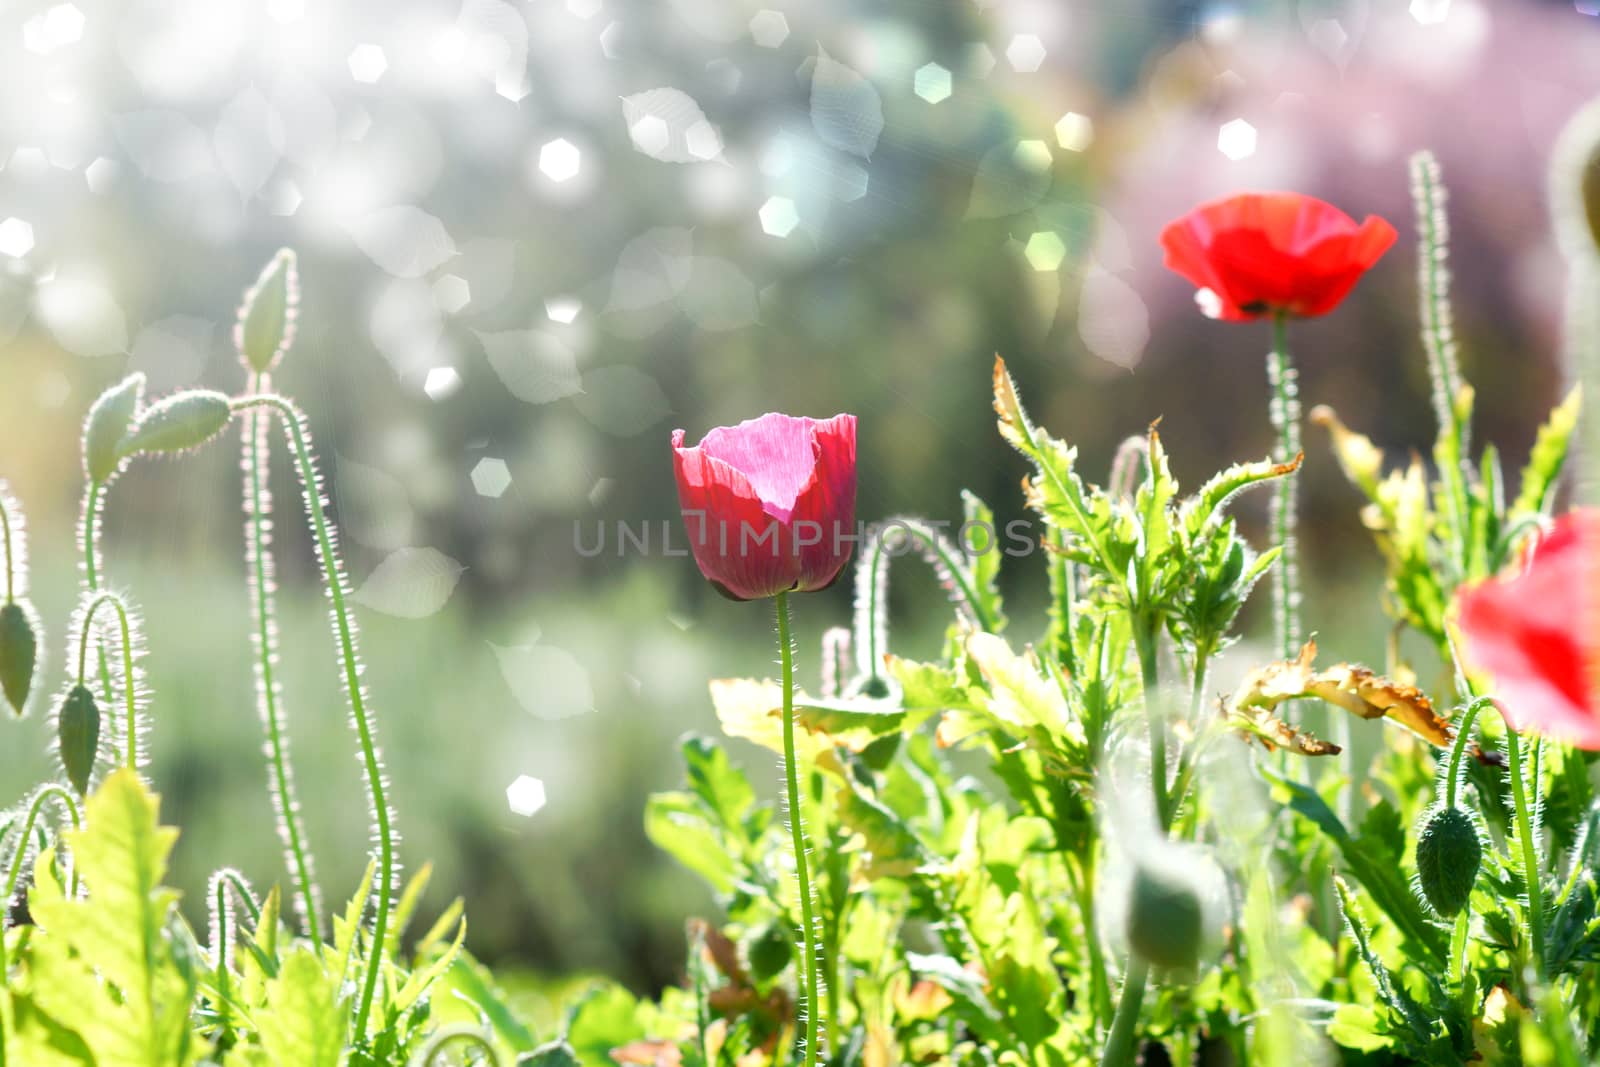 Poppy flowers in the garden by Noppharat_th